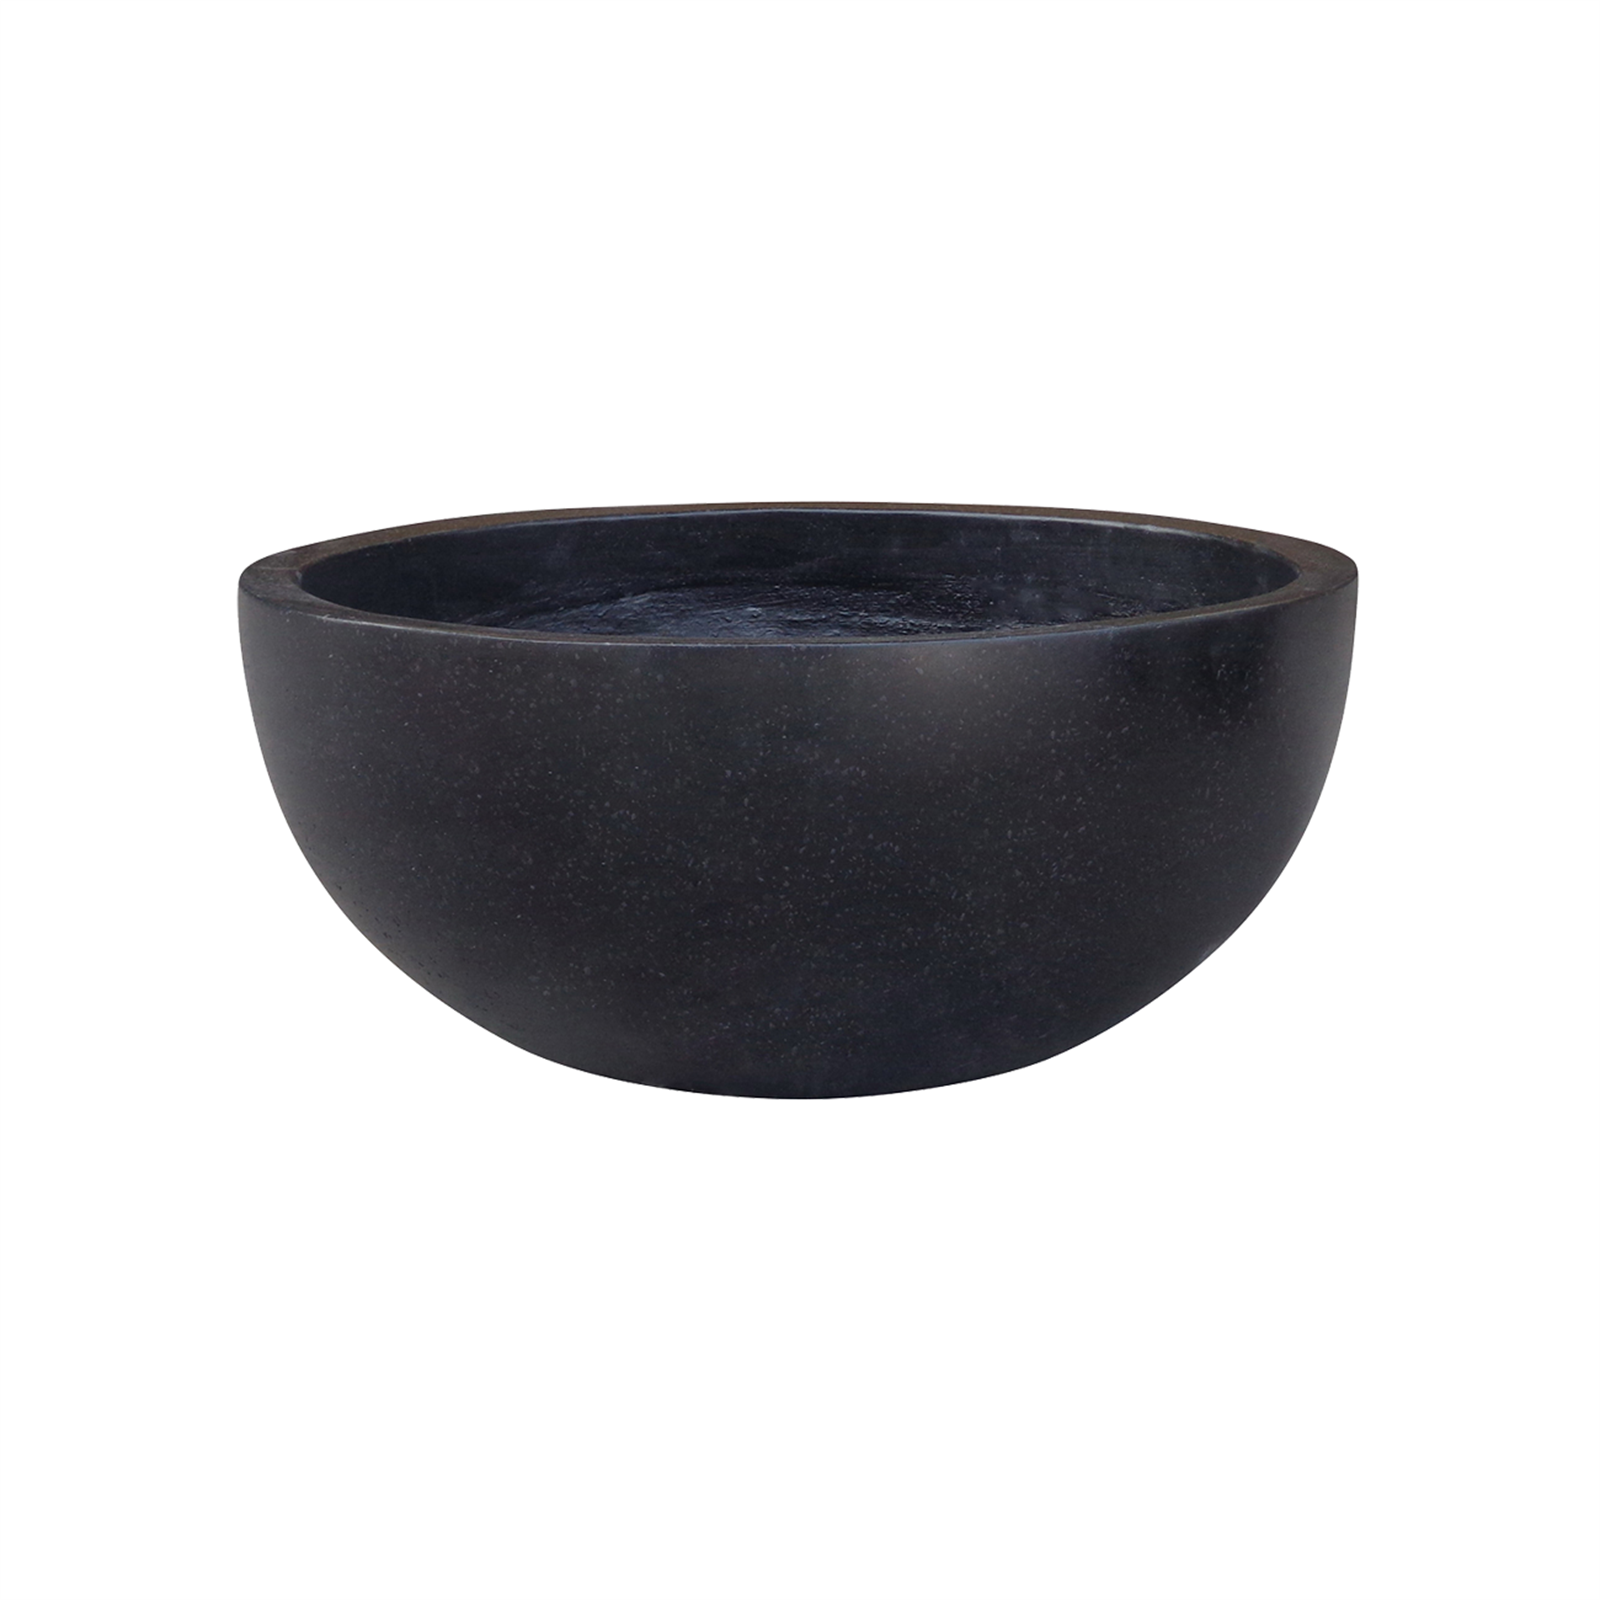 Northcote Pottery Black Precinct Lite Omni Bowl - Small